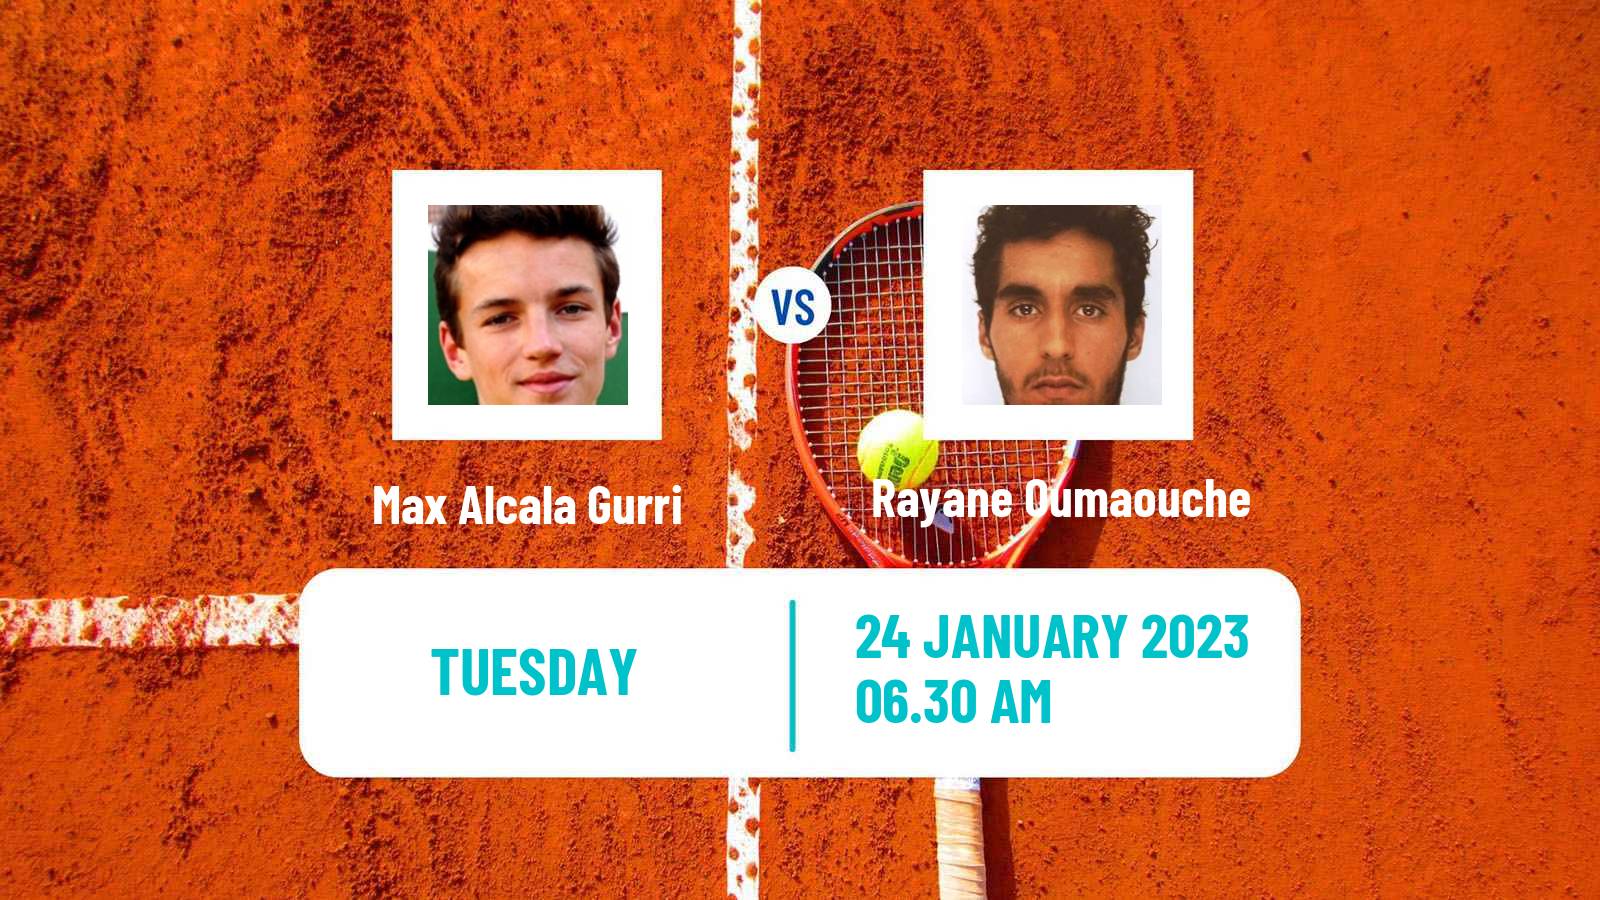 Tennis ITF Tournaments Max Alcala Gurri - Rayane Oumaouche